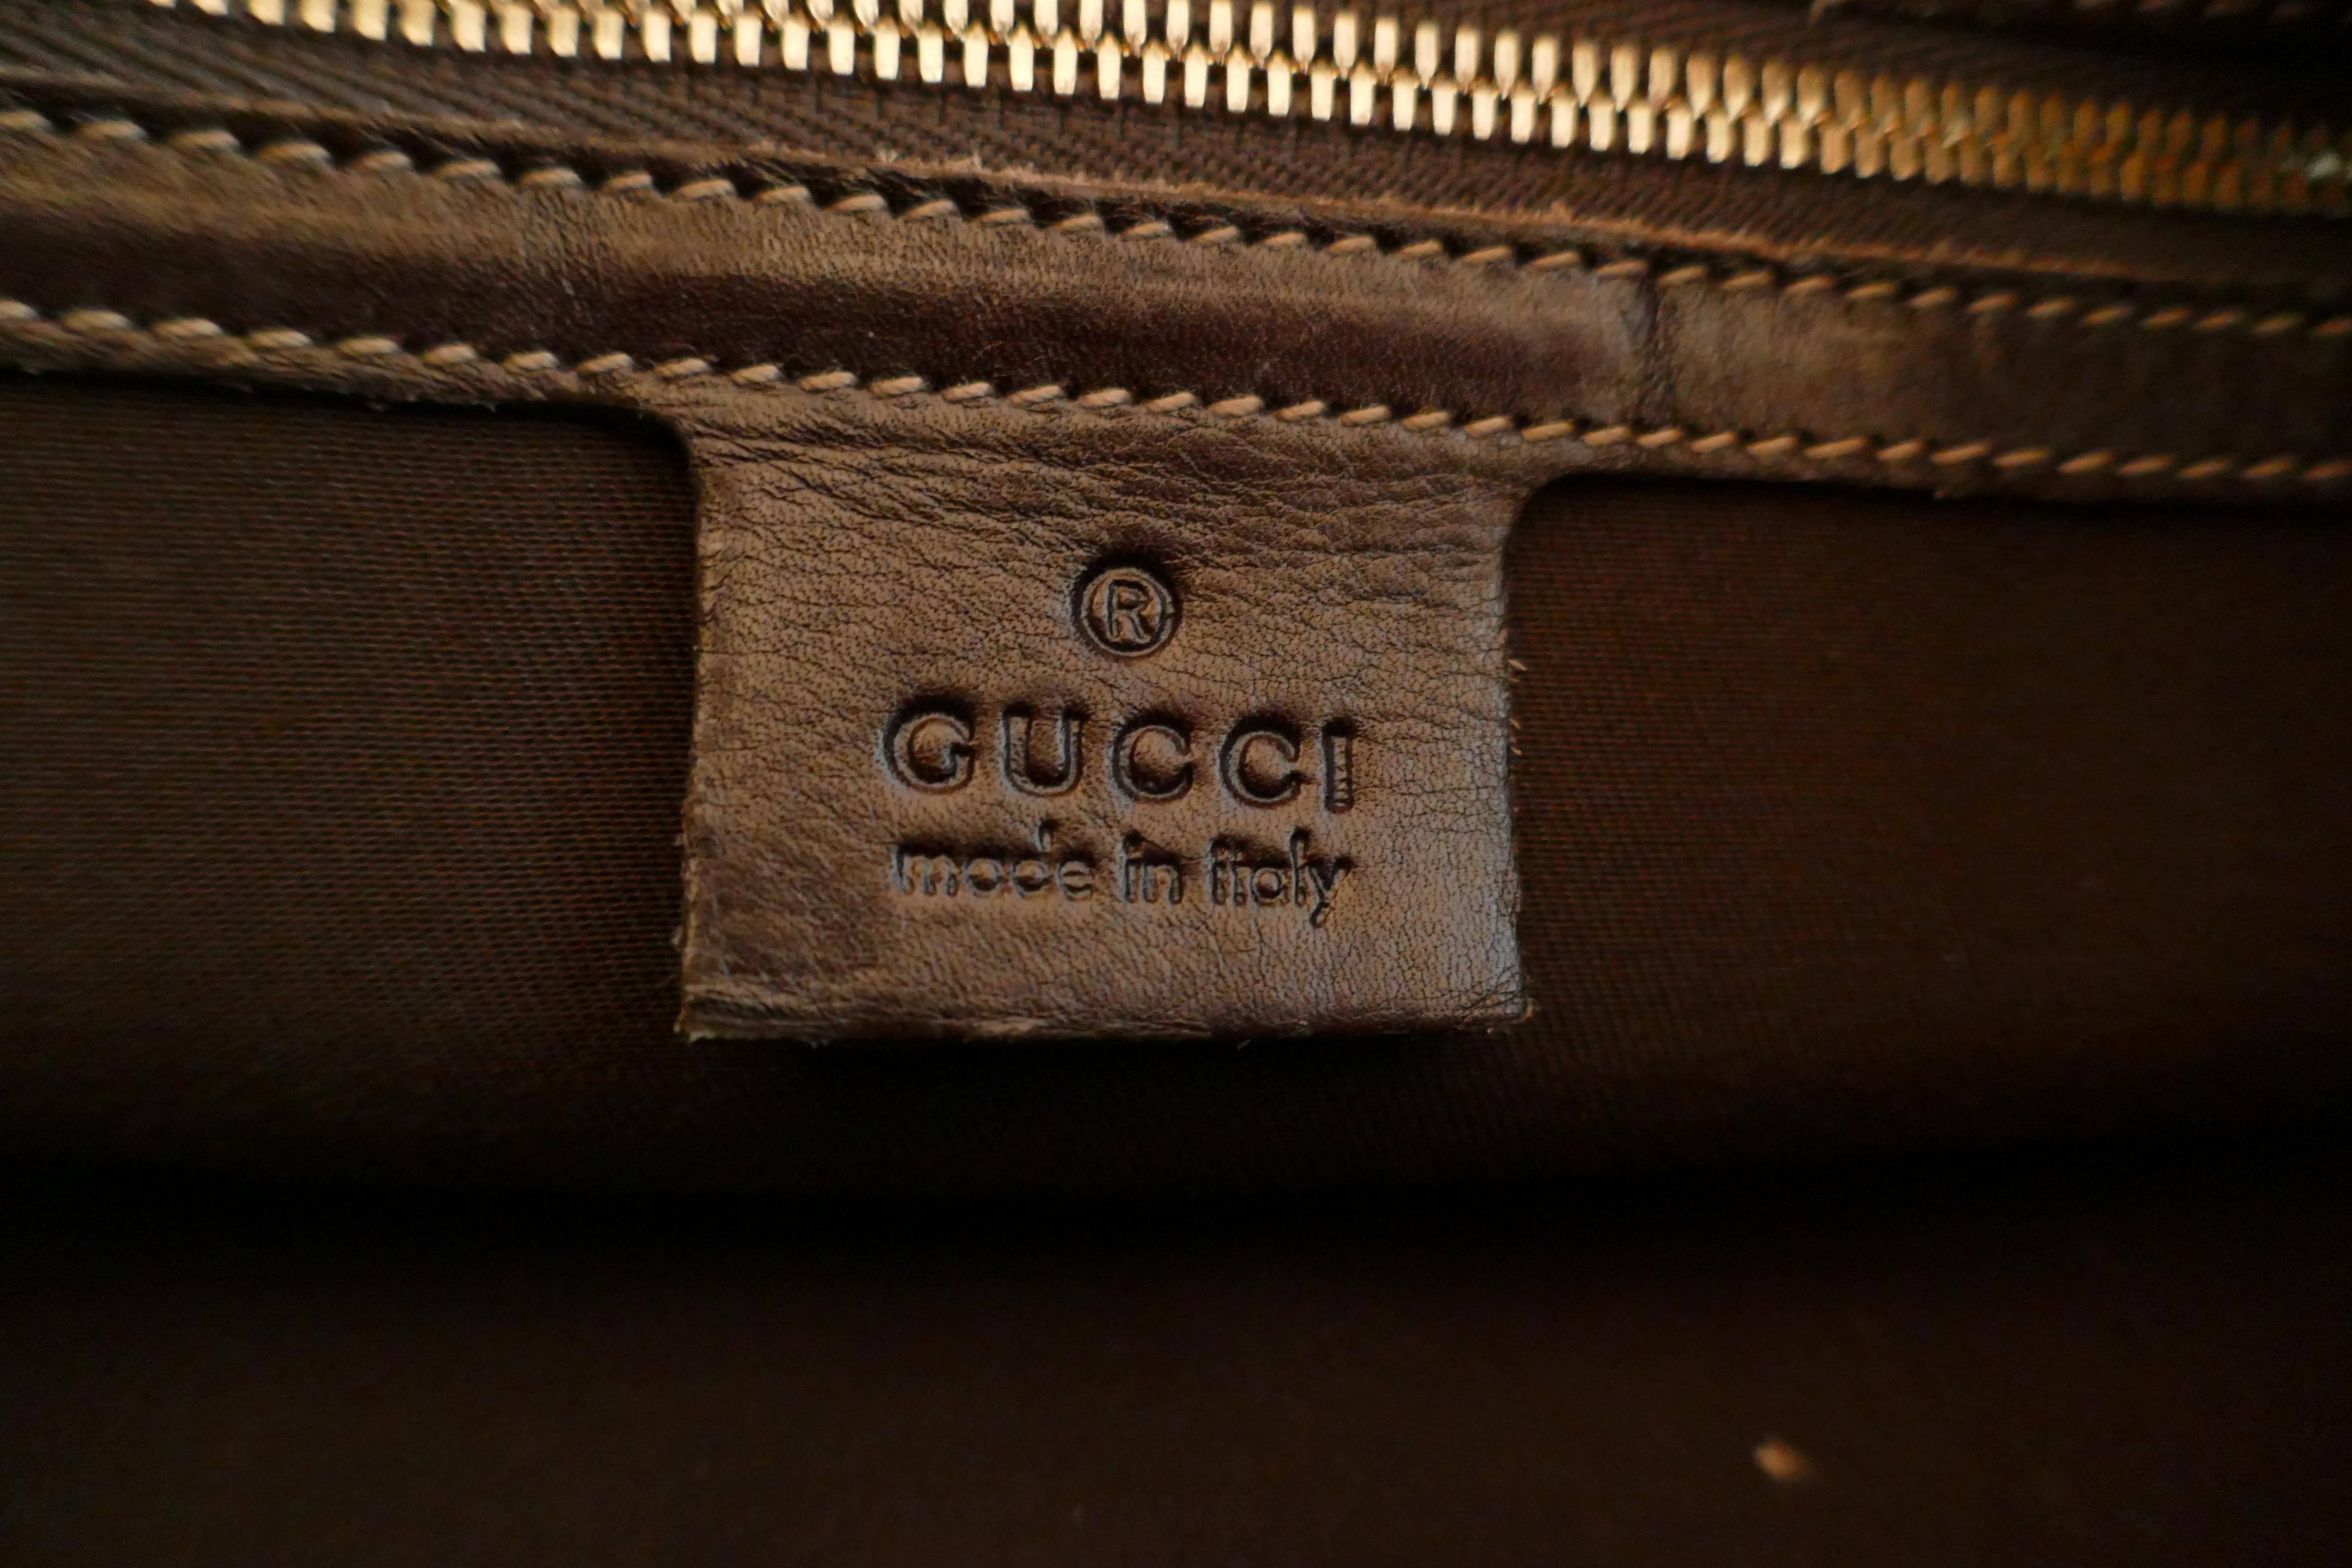 Gucci Vintage Satchel in Guccissima Canvas Wave Handbag, Horse-Bit and ...